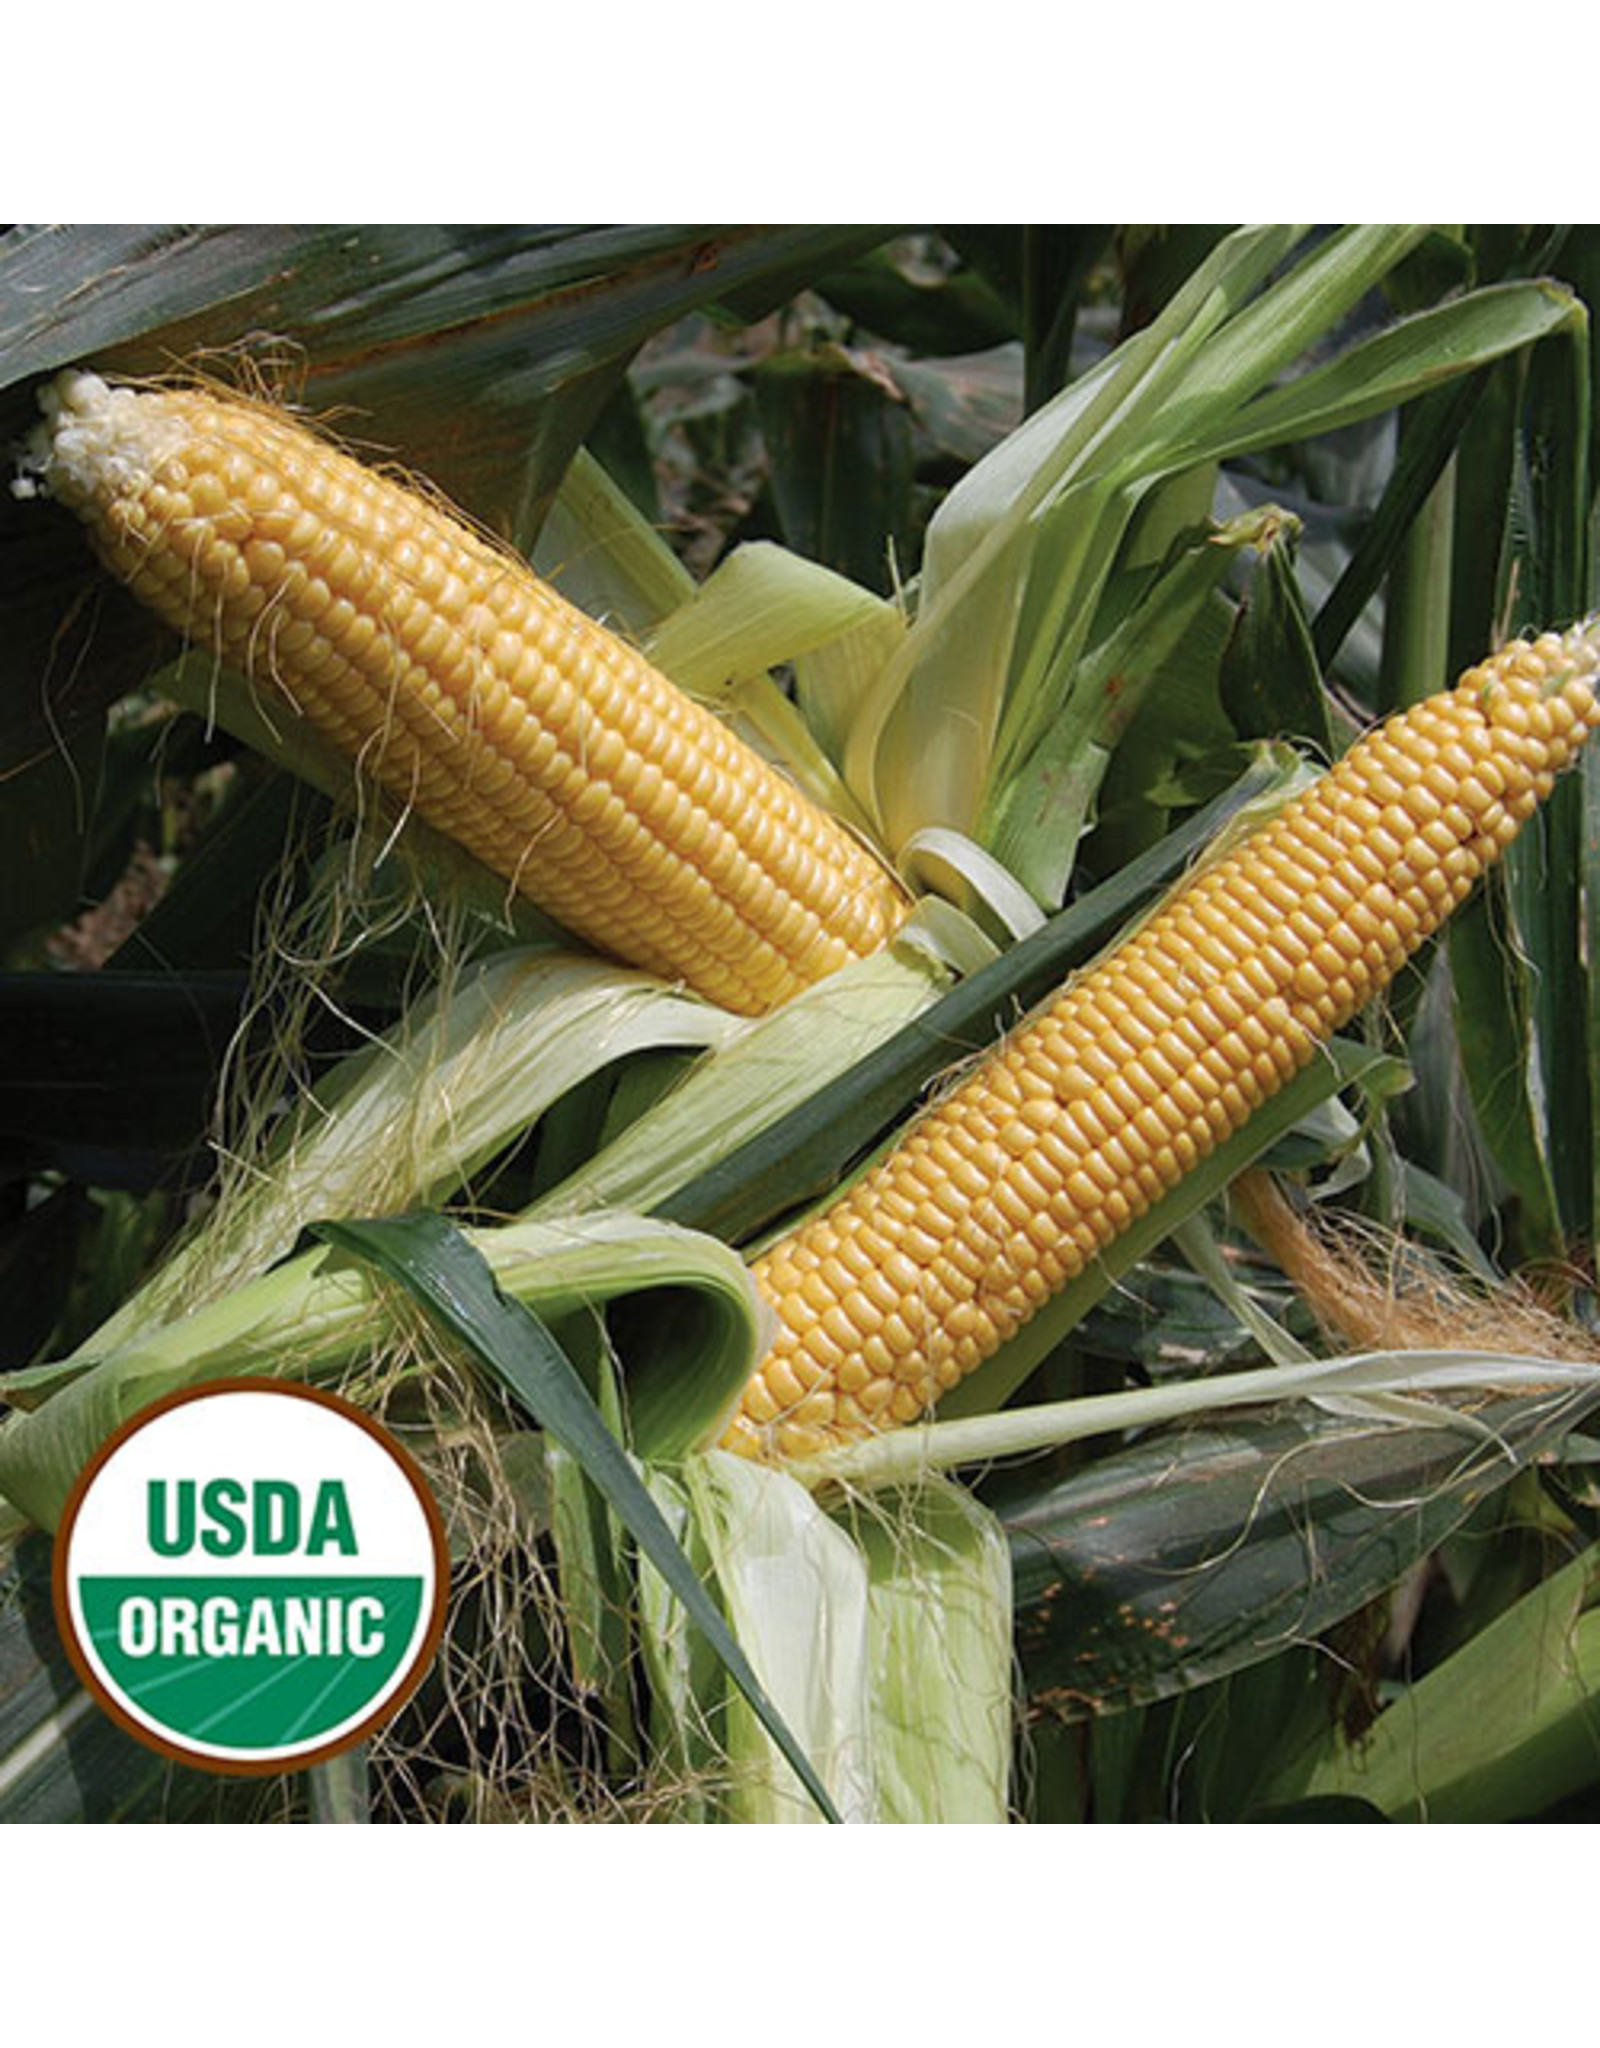 Seed Savers Corn - Golden Bantam Improved (organic)